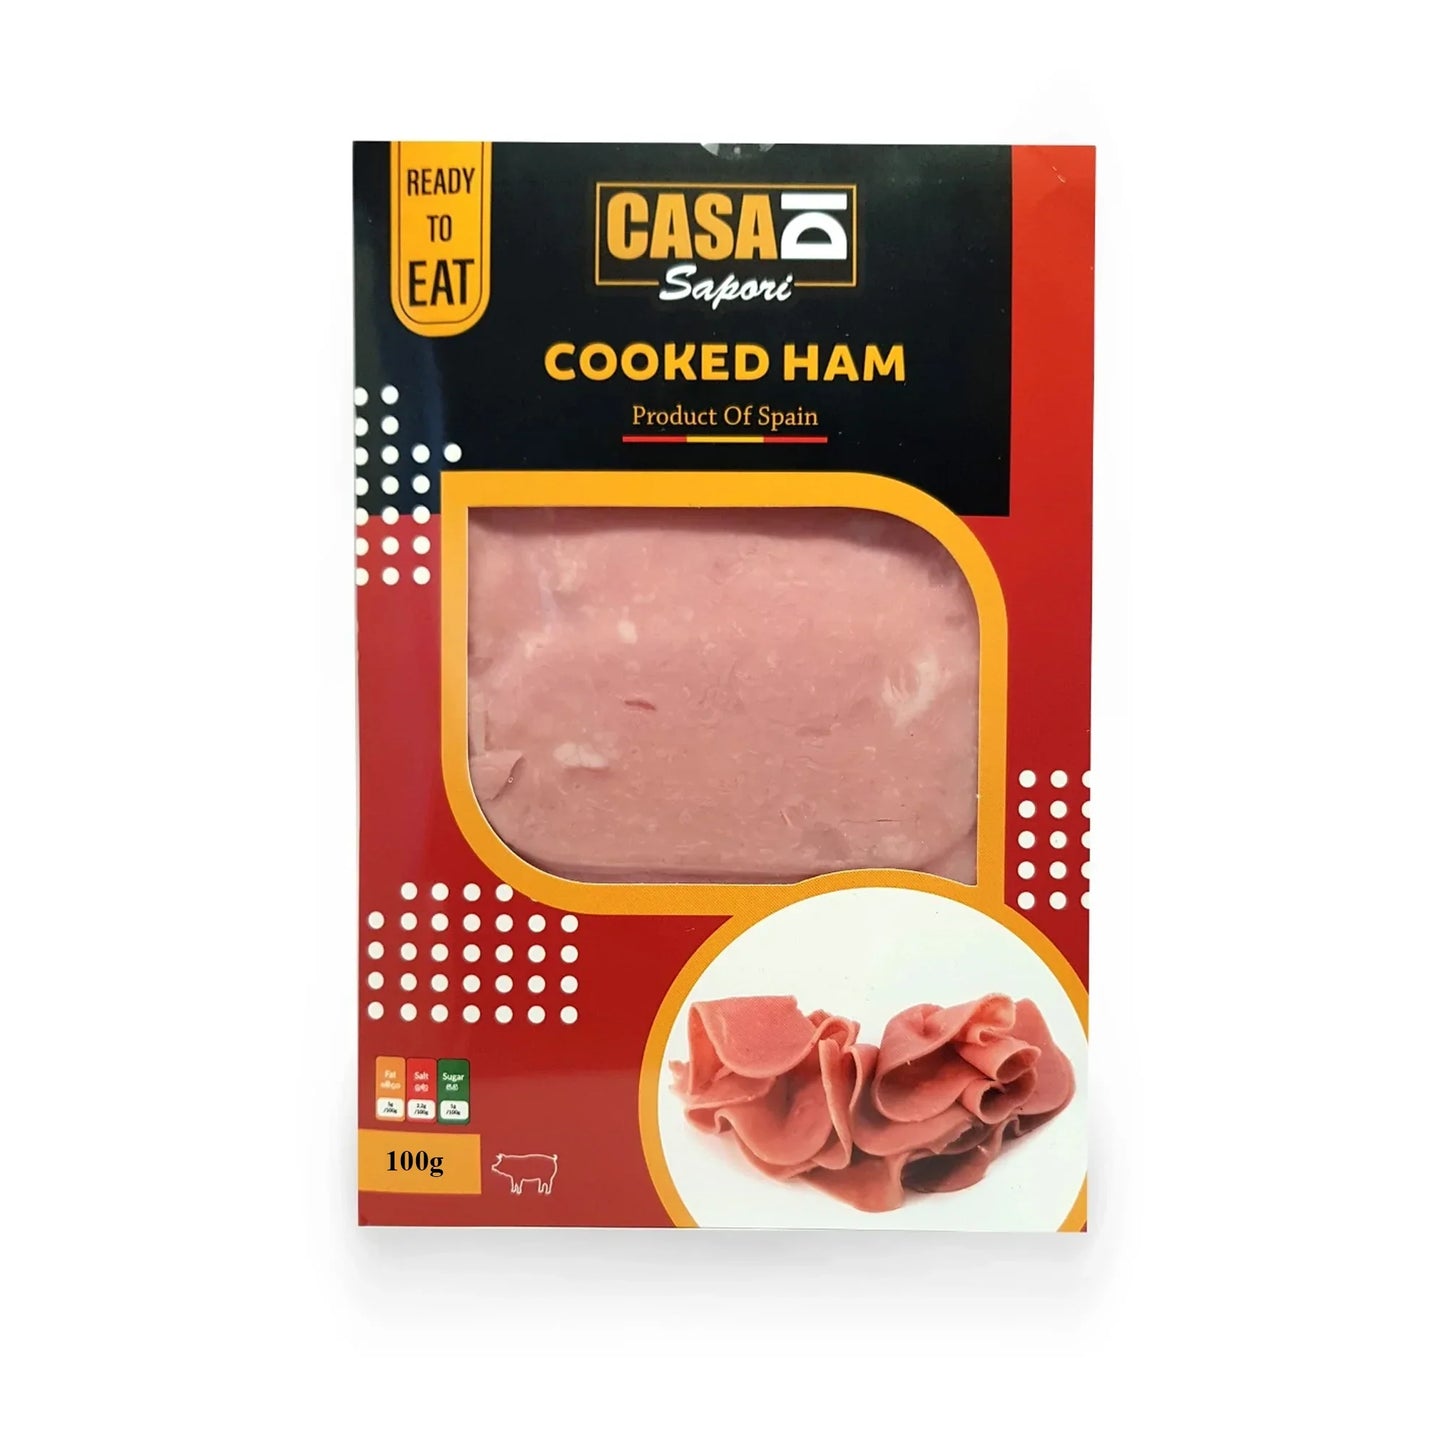 Casa di sapori cooked ham 100g 10%Off